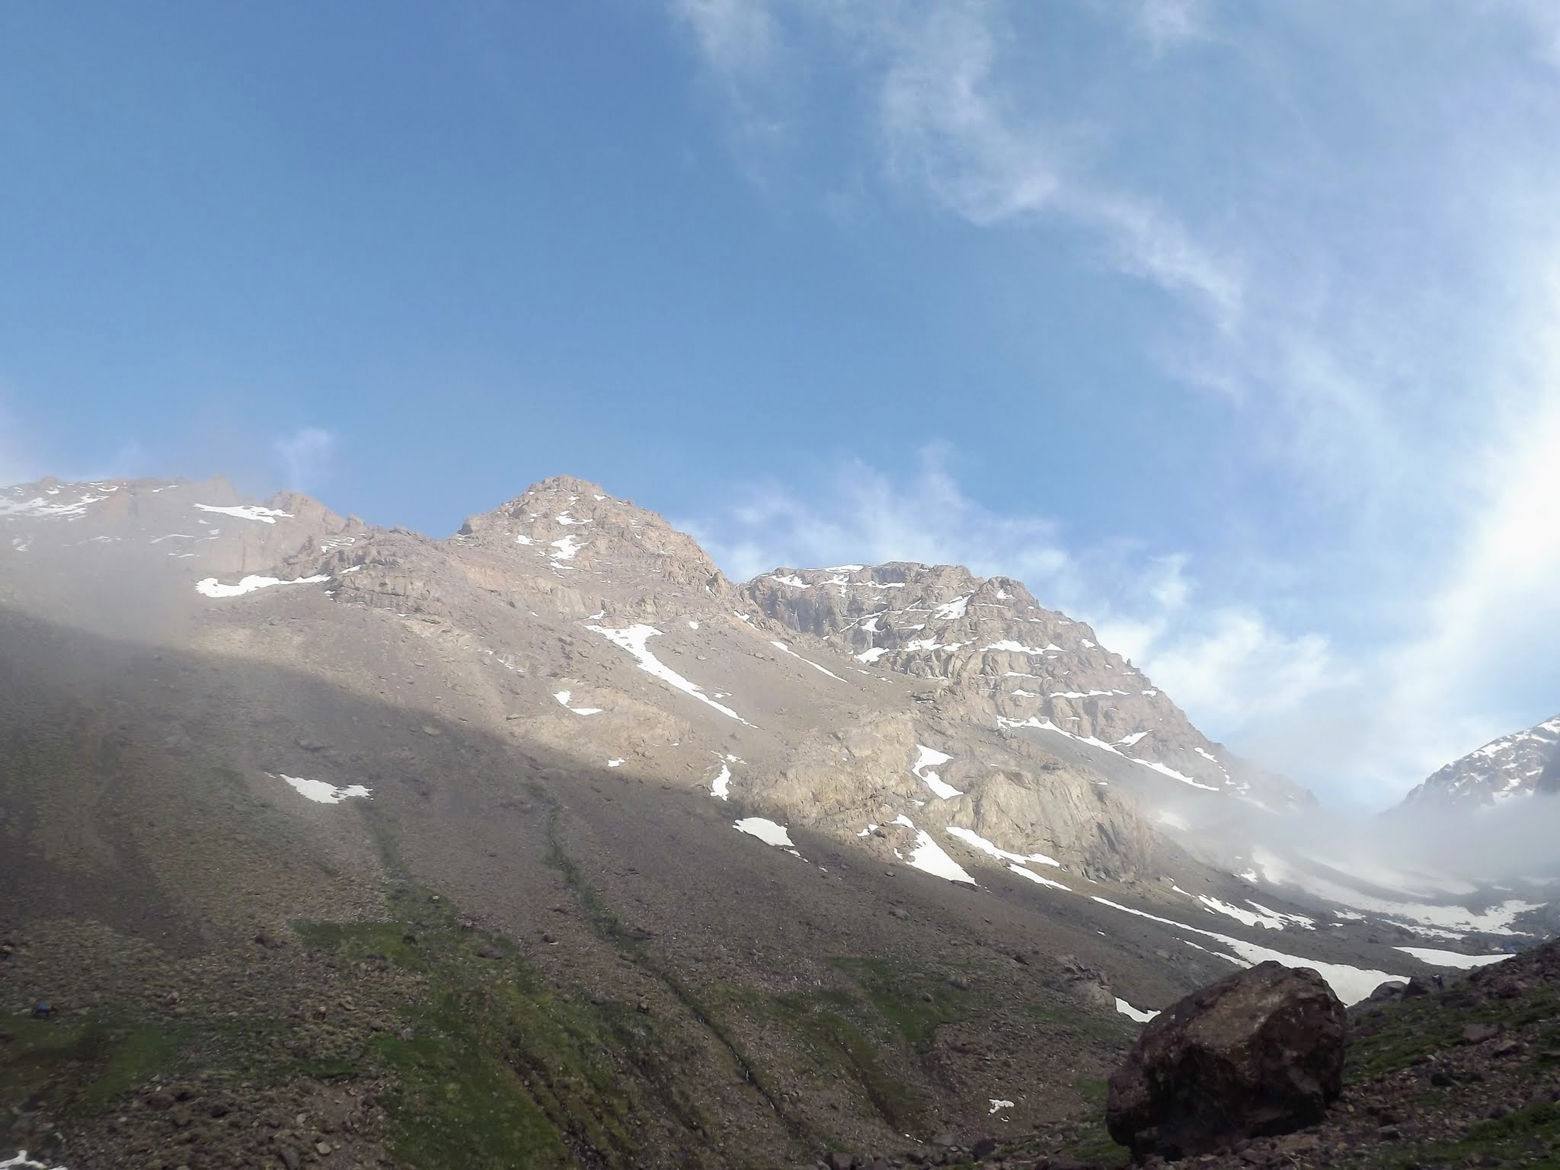 Scenery from Atlas Mountains near Toubkal